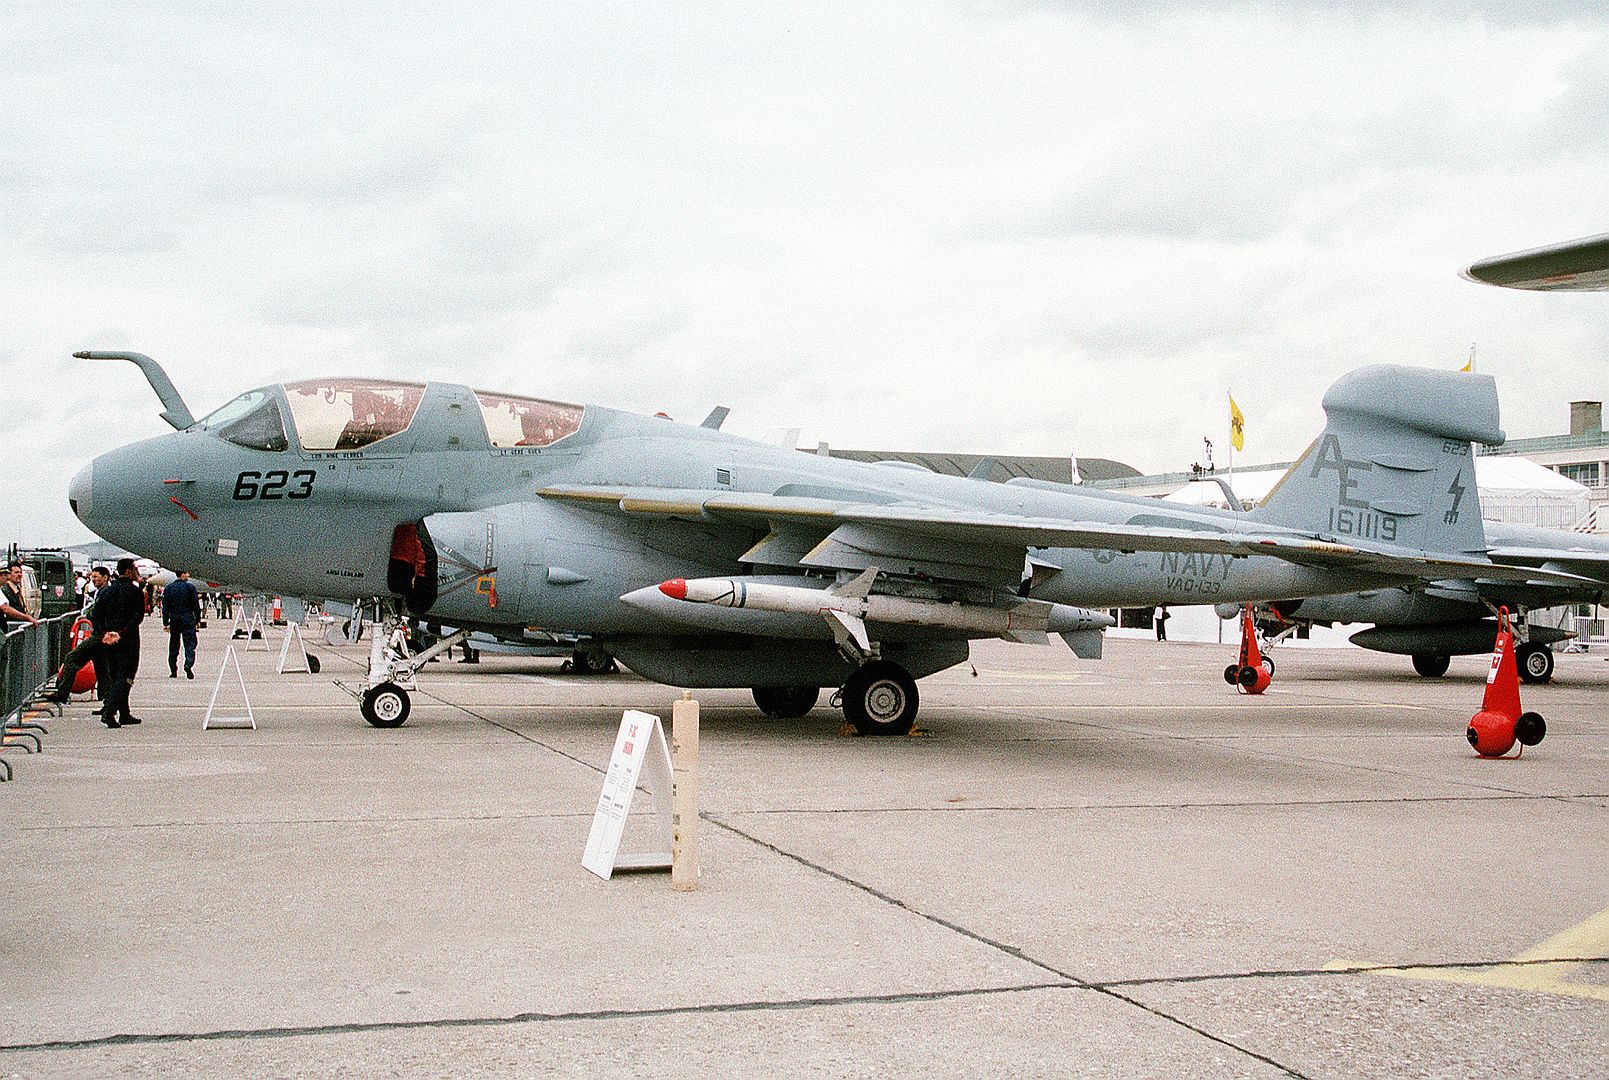 6B Prowler Aircraft Sits On Display At The 1991 Paris Air Show